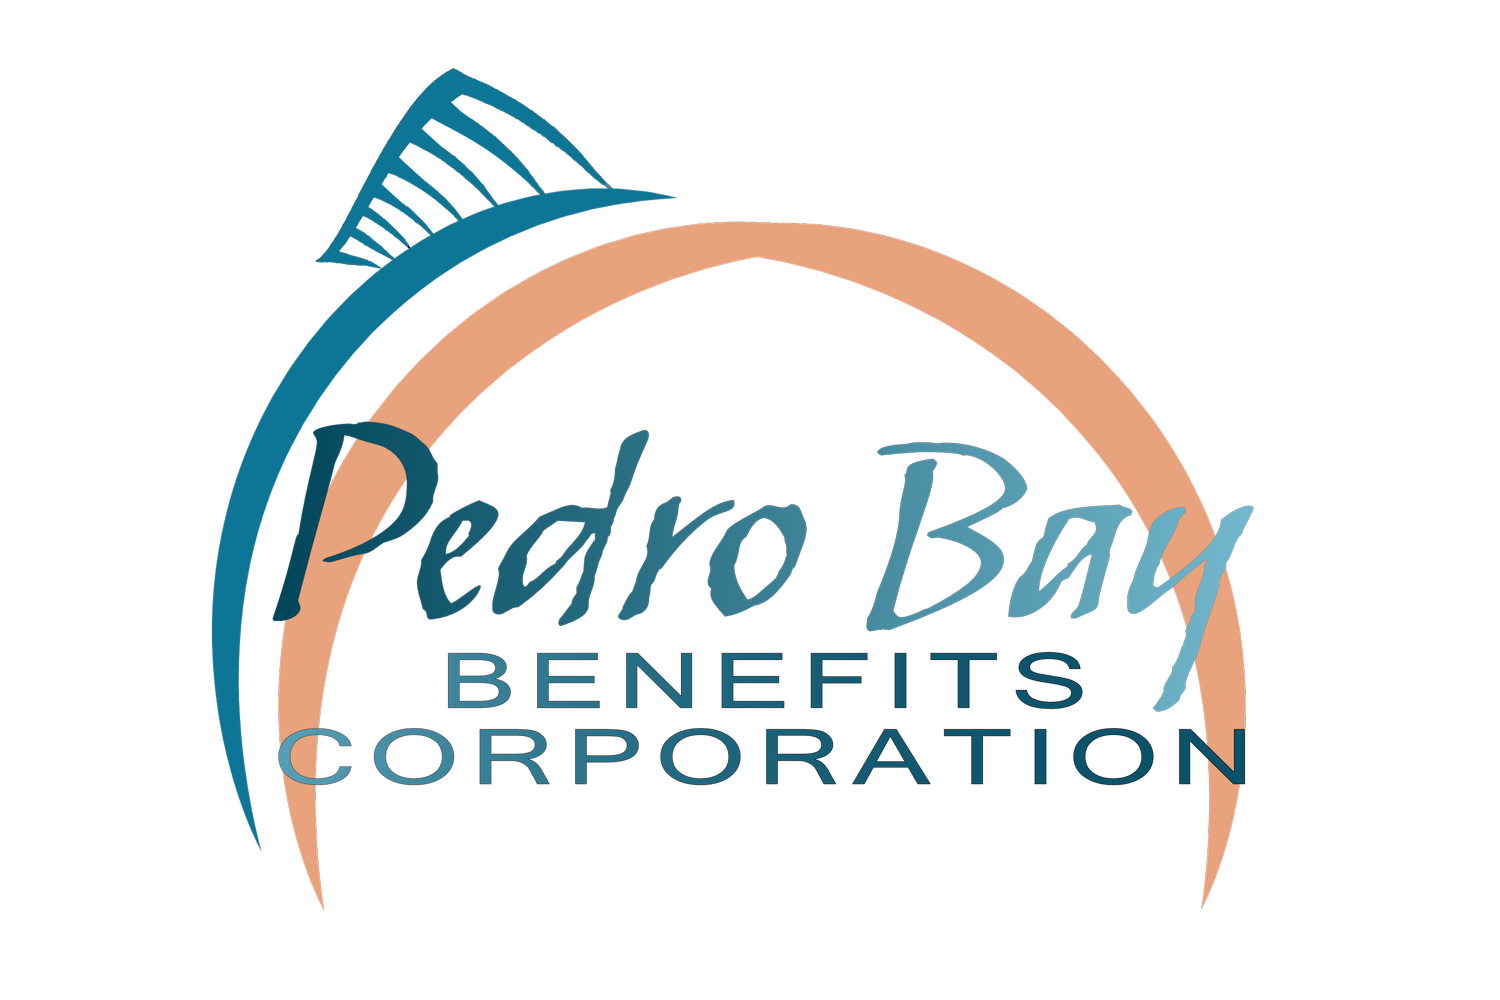 Pedro Bay Benefits Corp